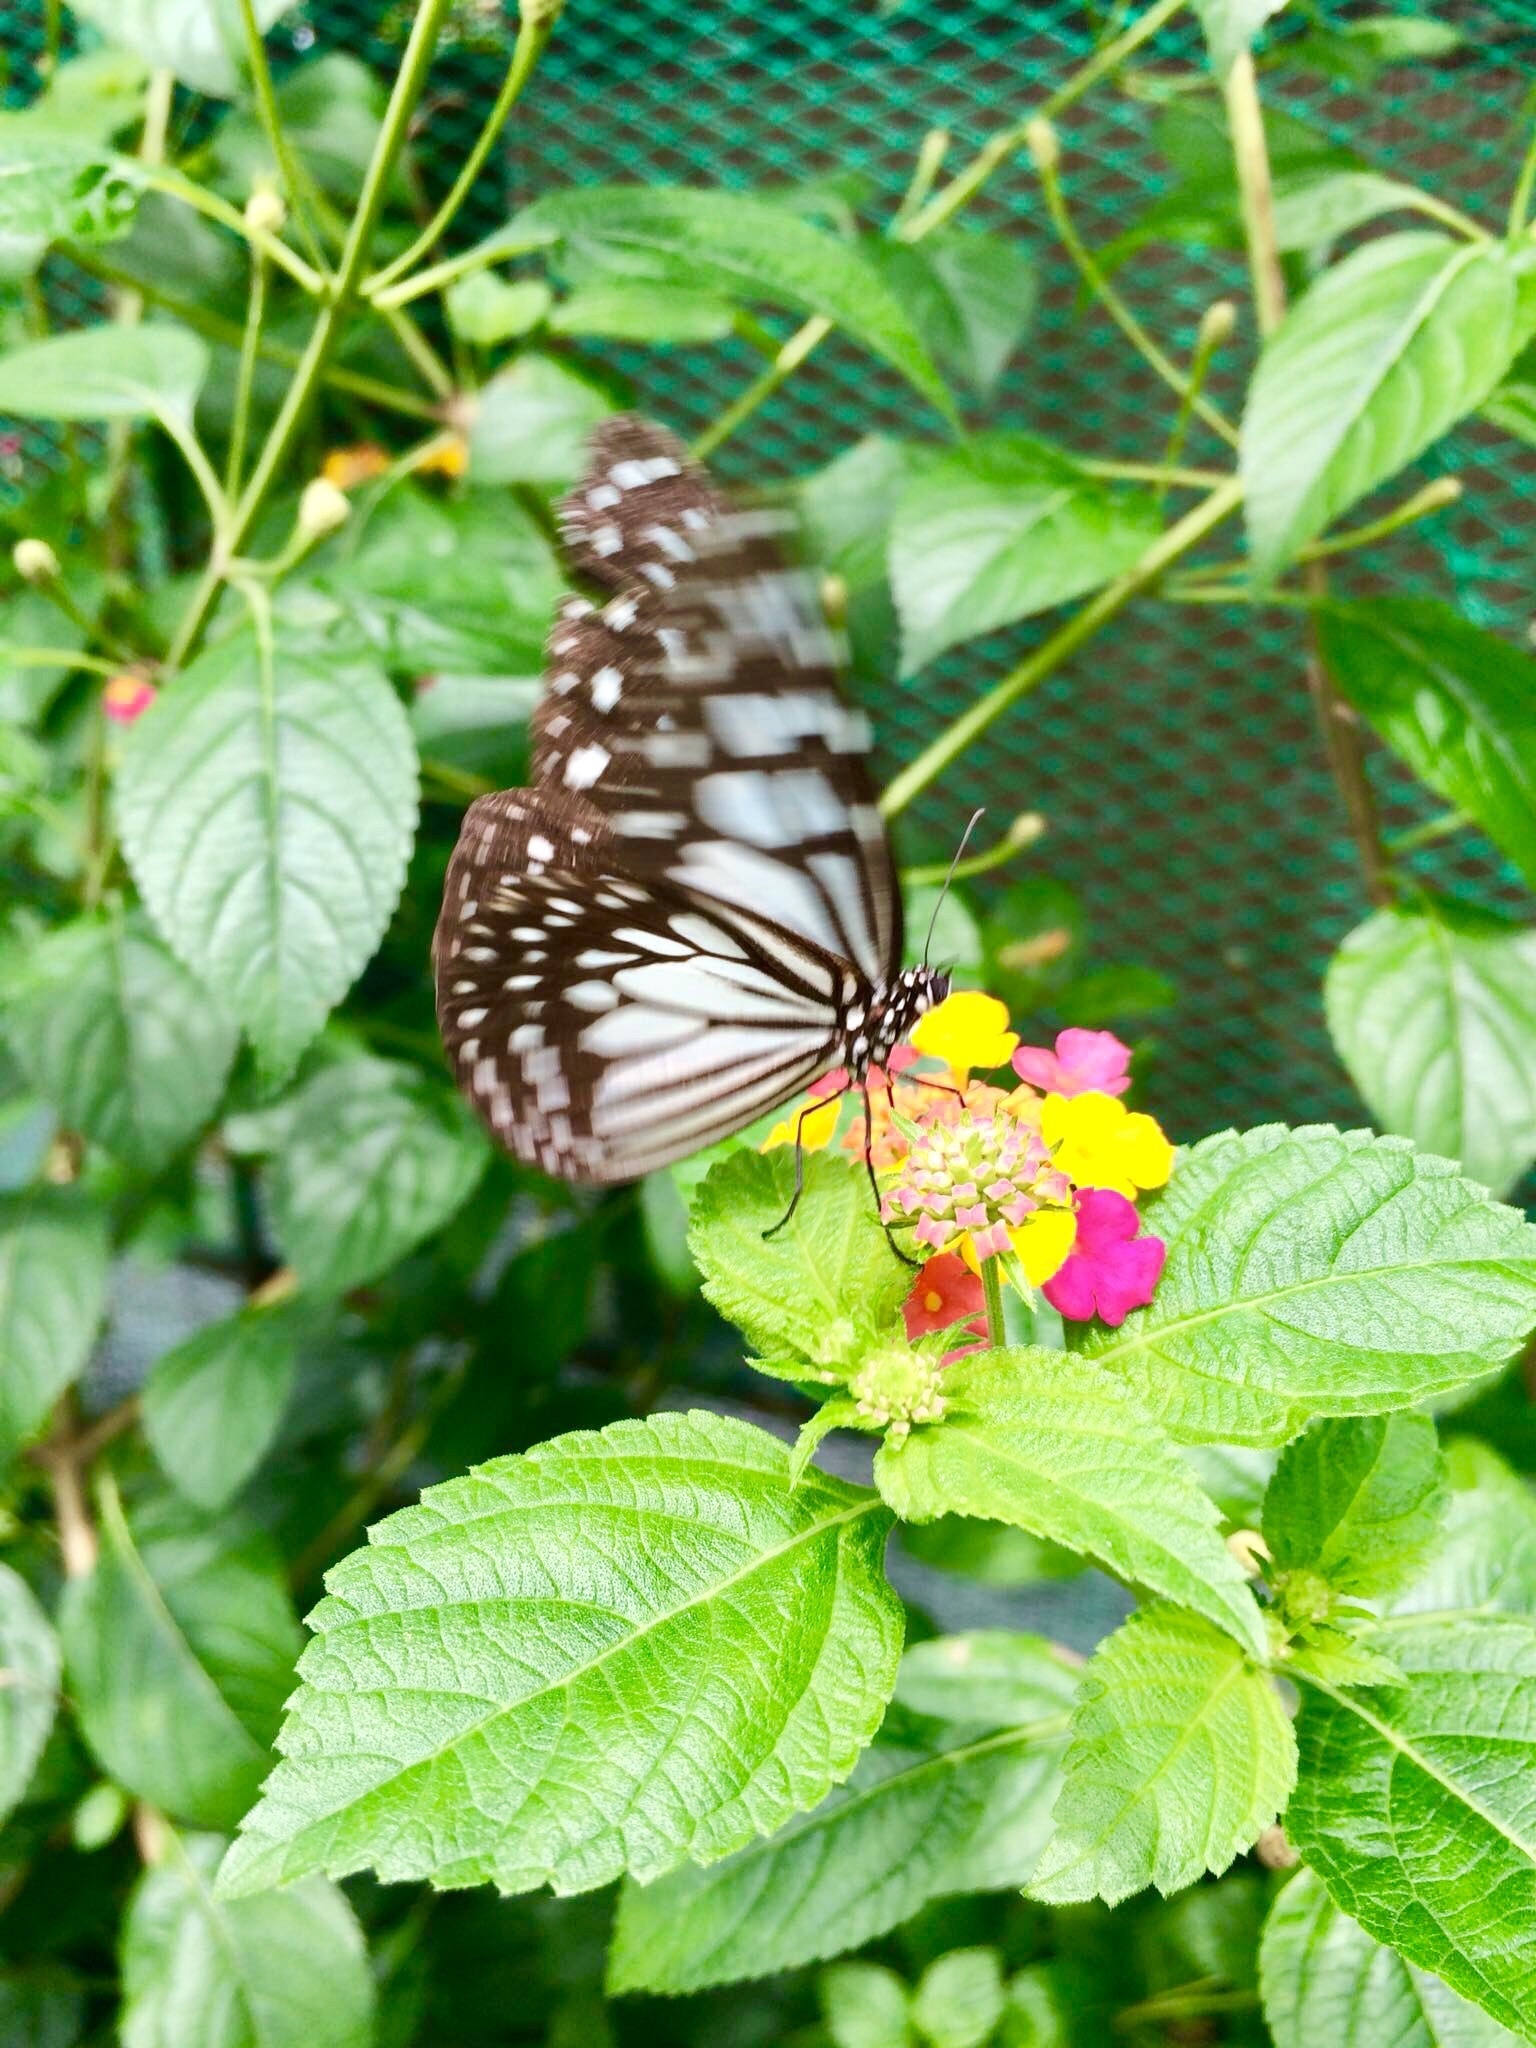 This Butterflies are found in Butterfly Garden, Bohol, Philippines. #Wildlife Photo Challenge